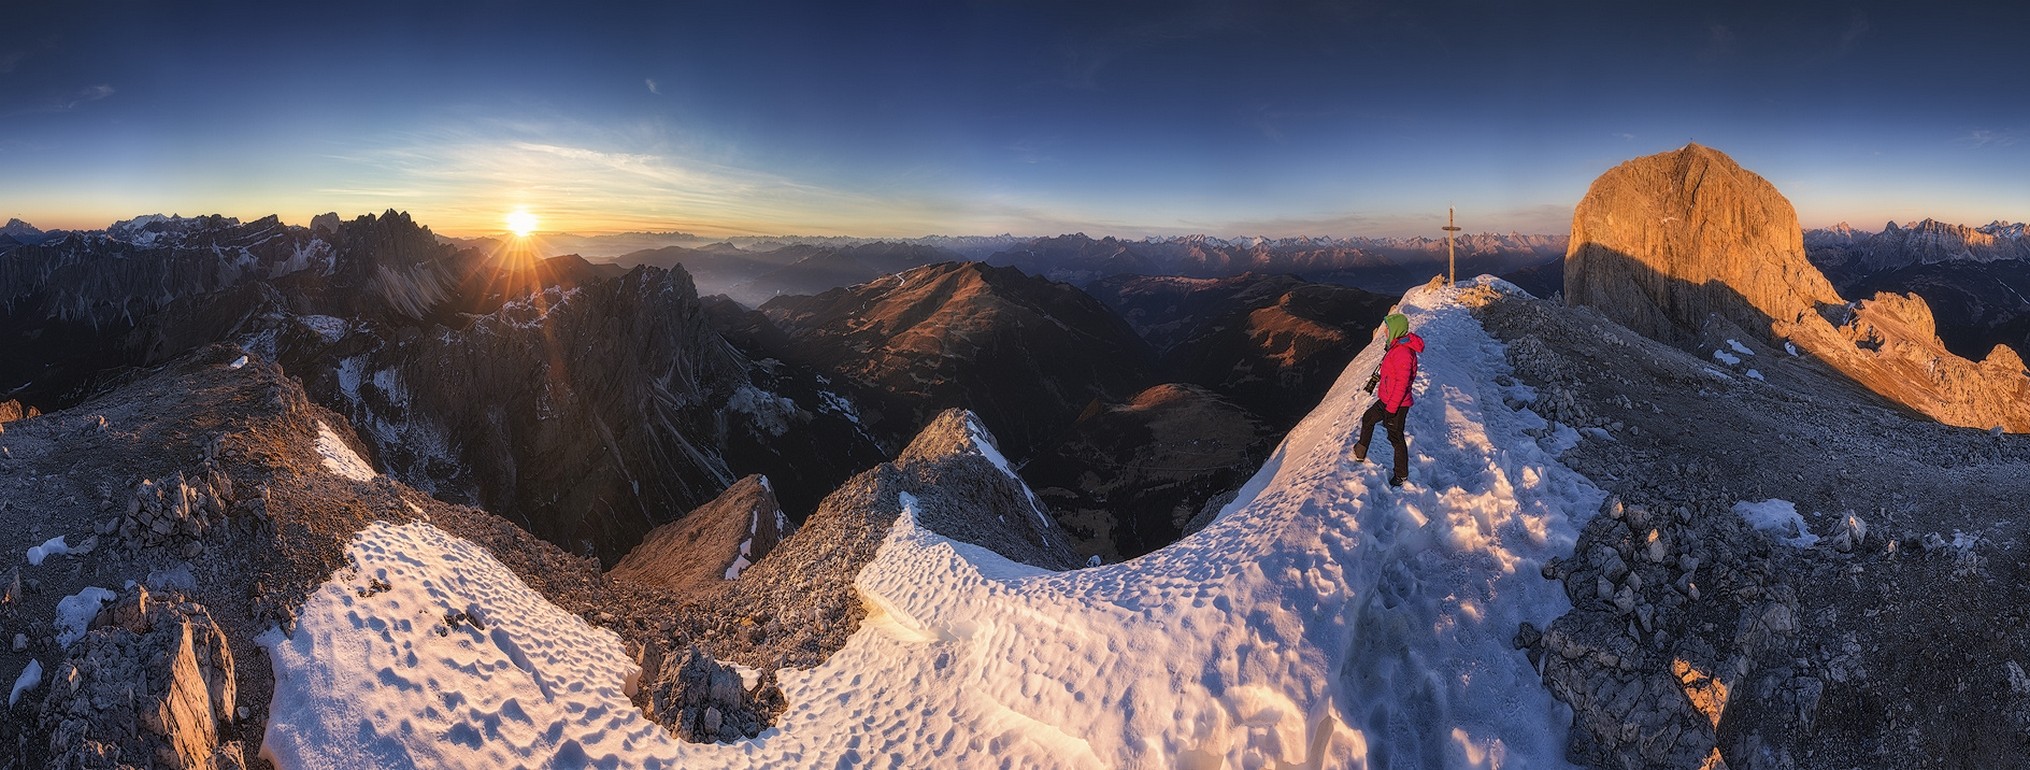 Landscape Nature Dolomites Mountains Sunset Panoramas Snow Summit Cross Hiking Winter Italy 2030x770